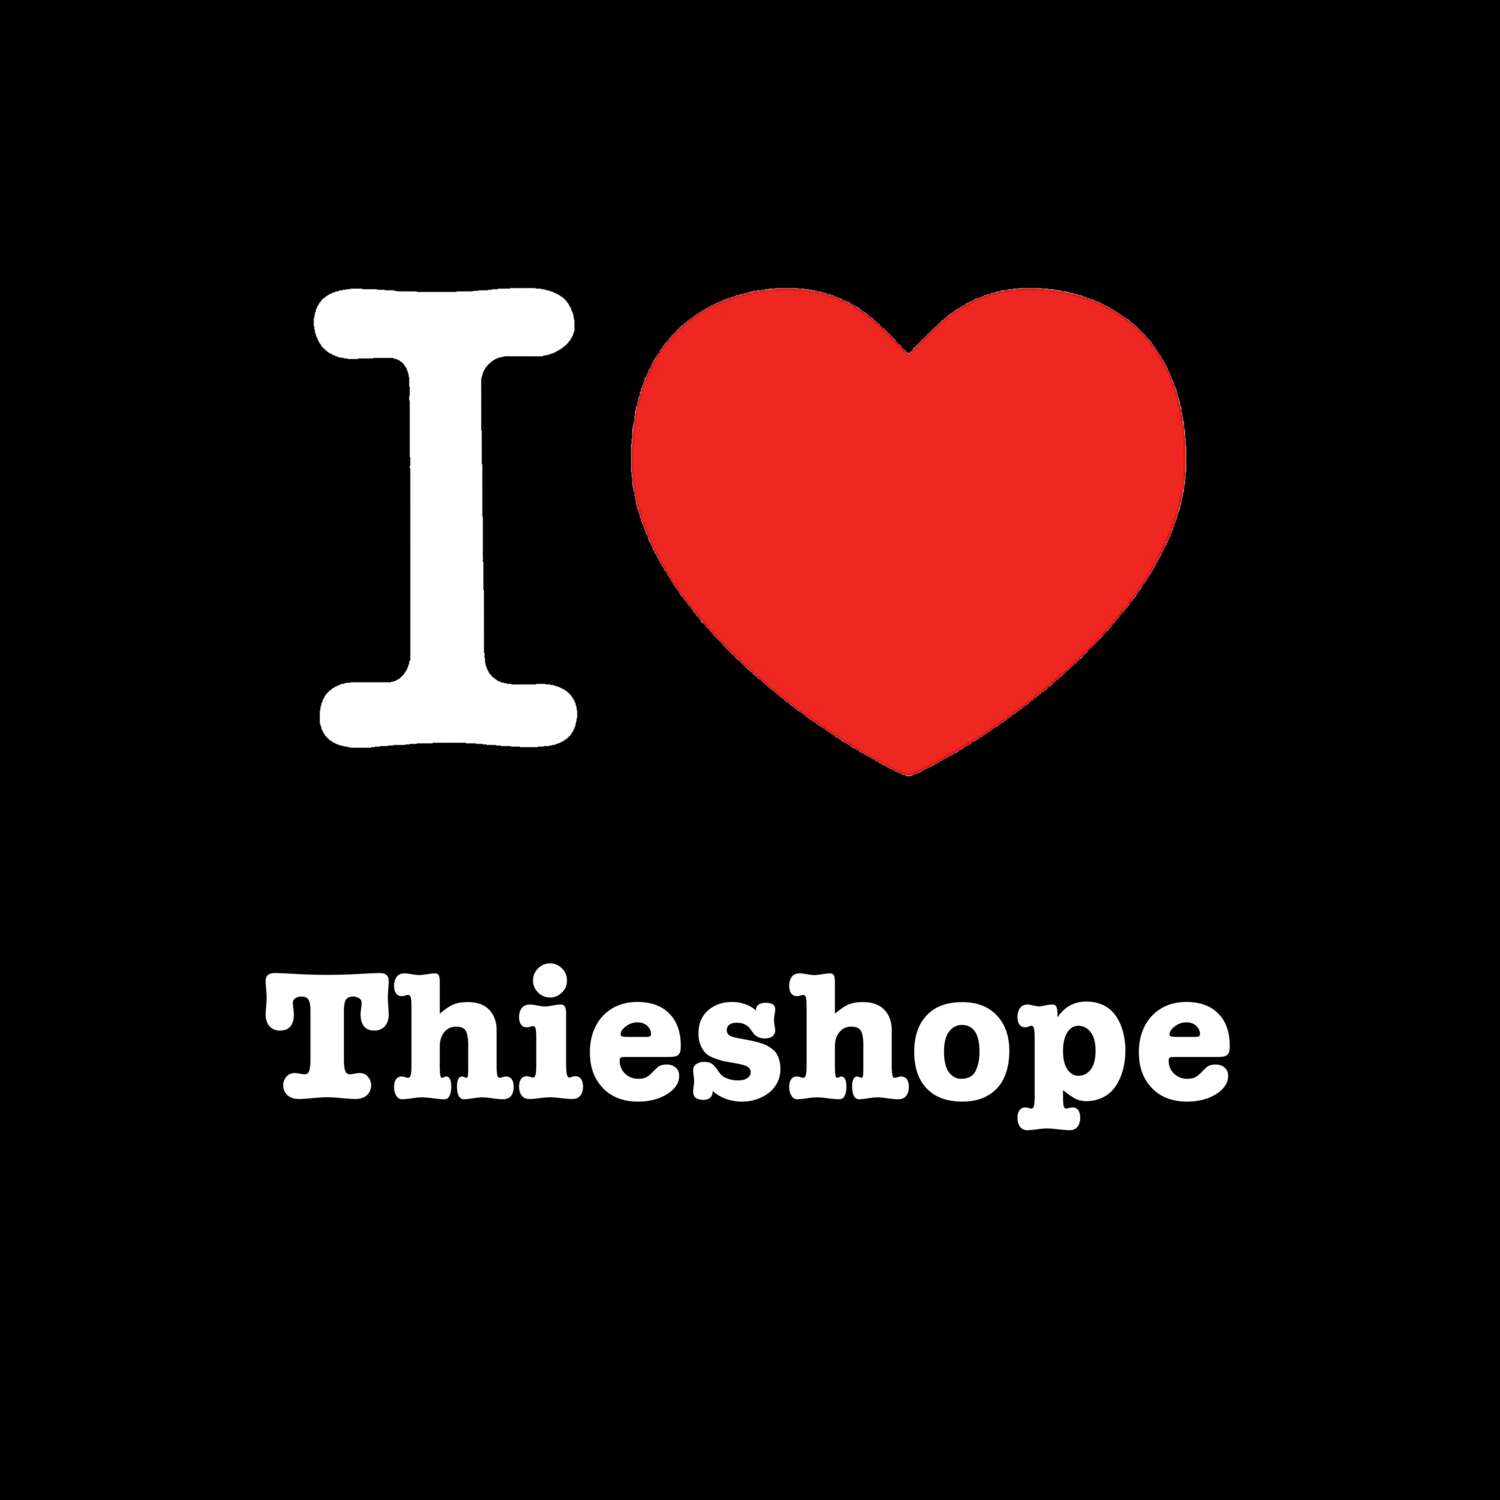 Thieshope T-Shirt »I love«